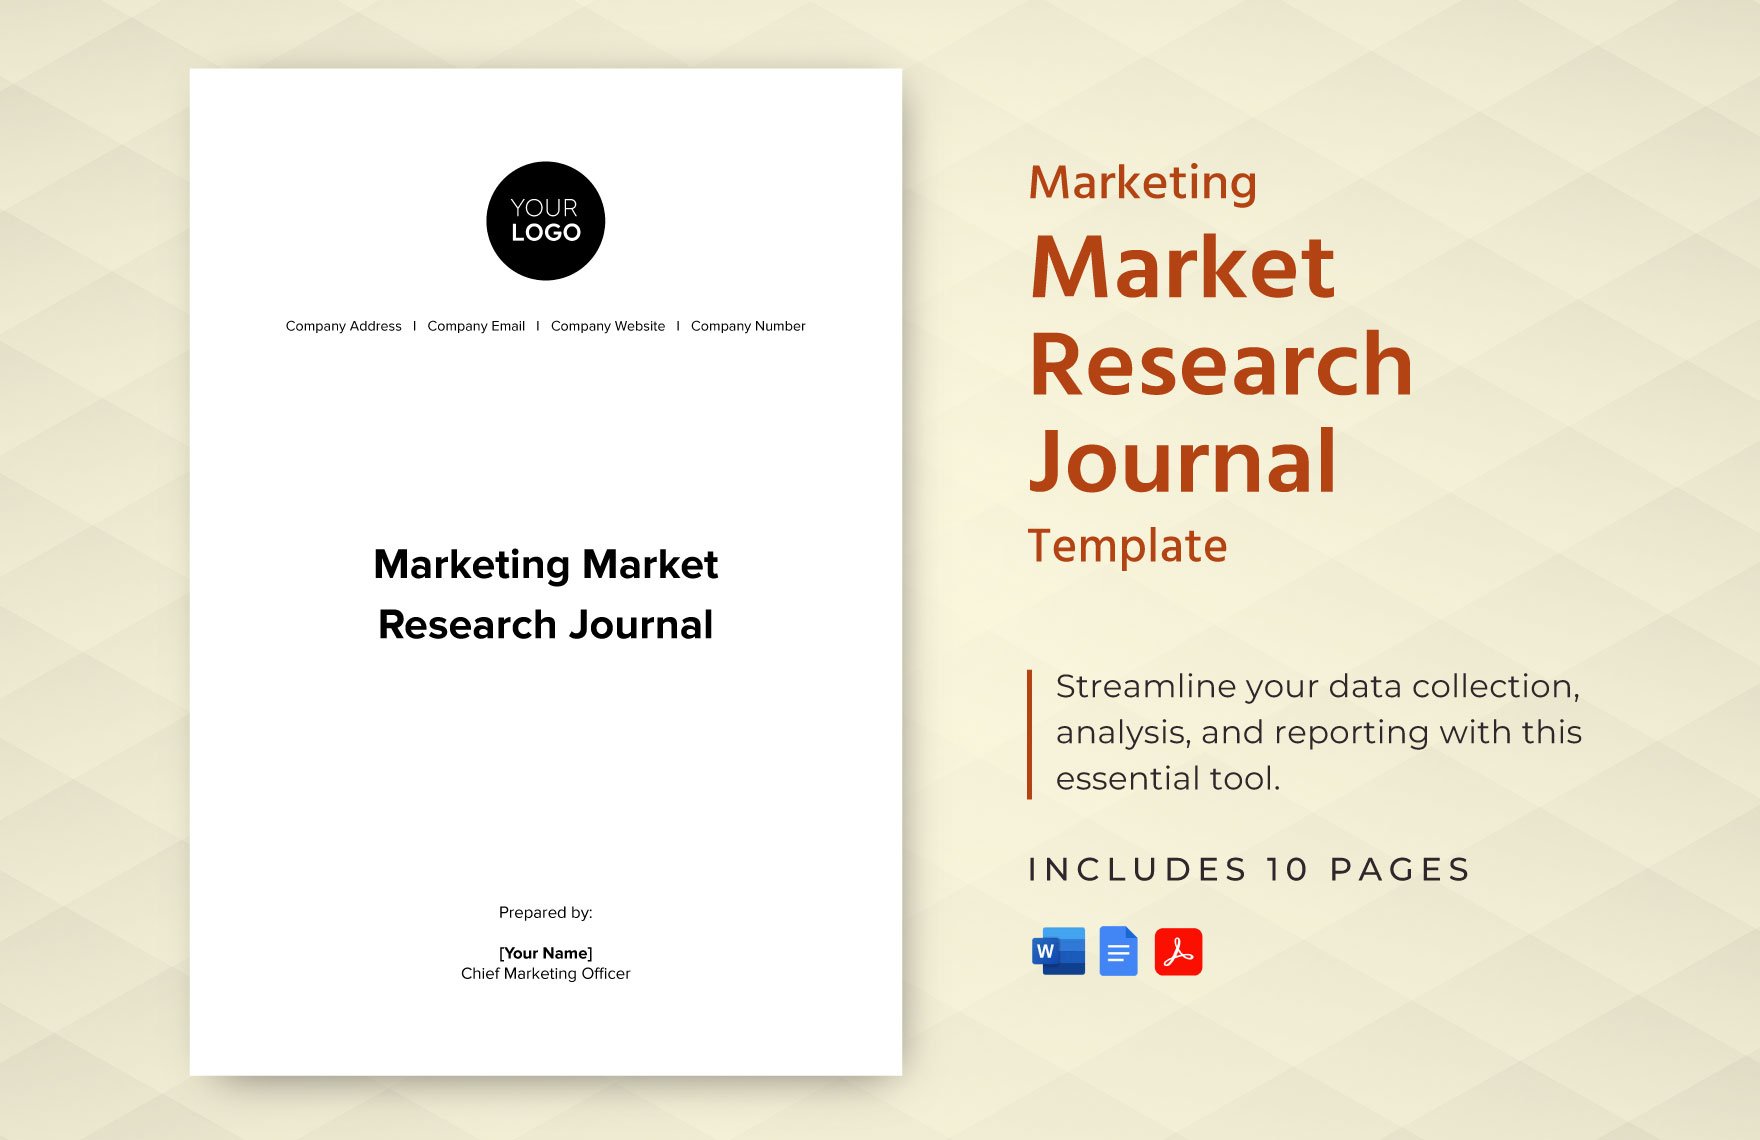 Marketing Market Research Journal Template